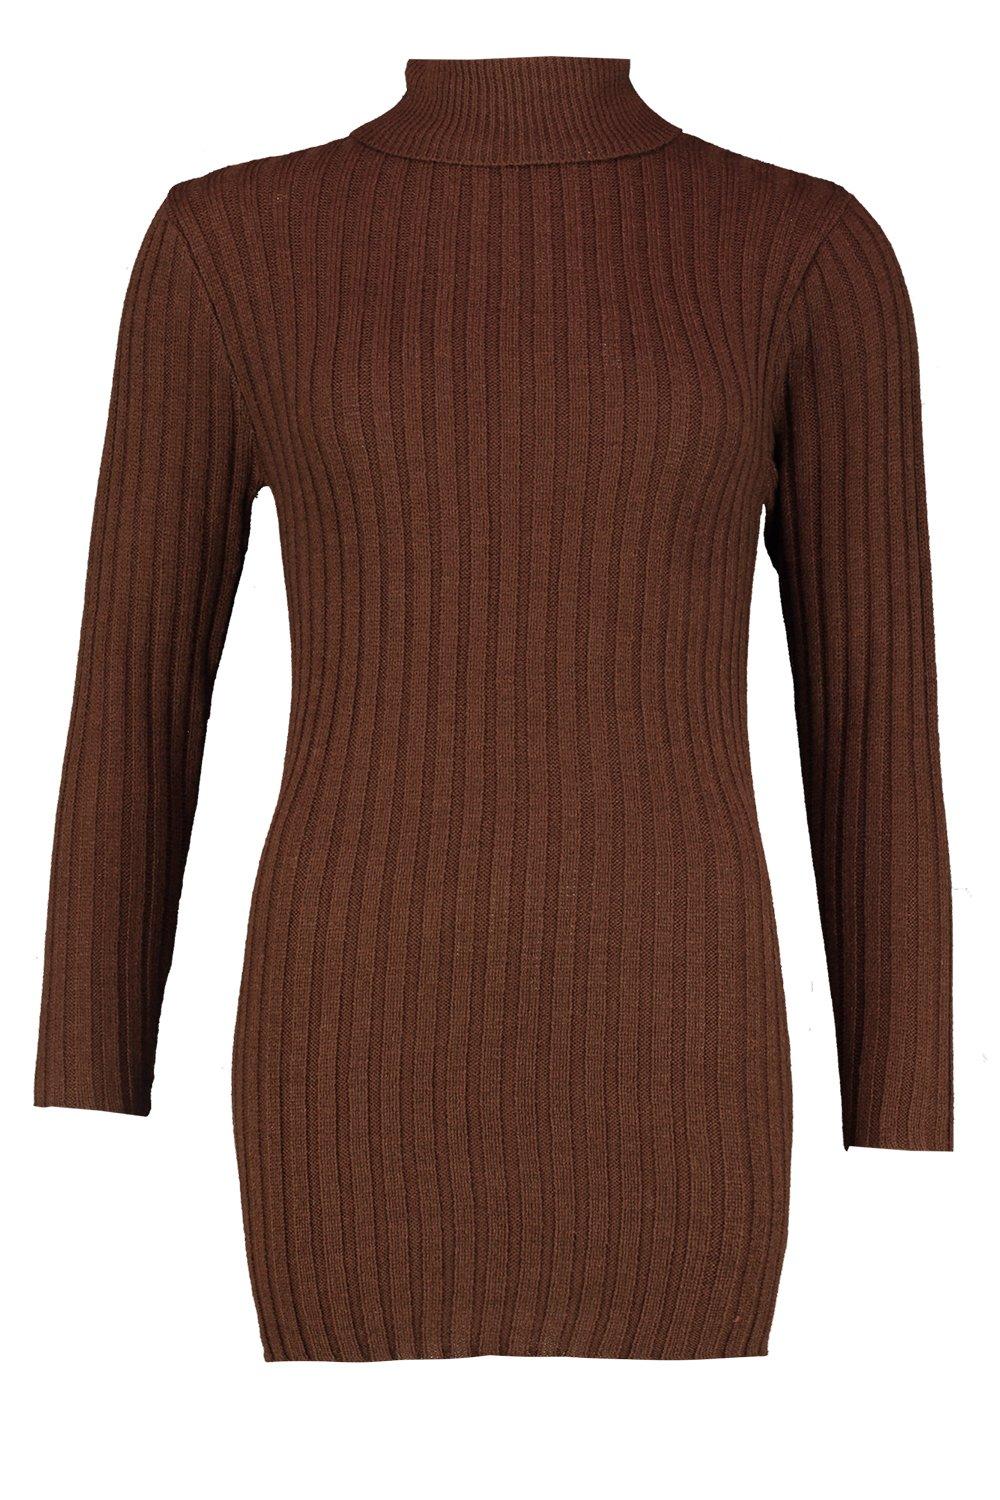 Petite Rib Knit Turtleneck Micro Mini Sweater Dress